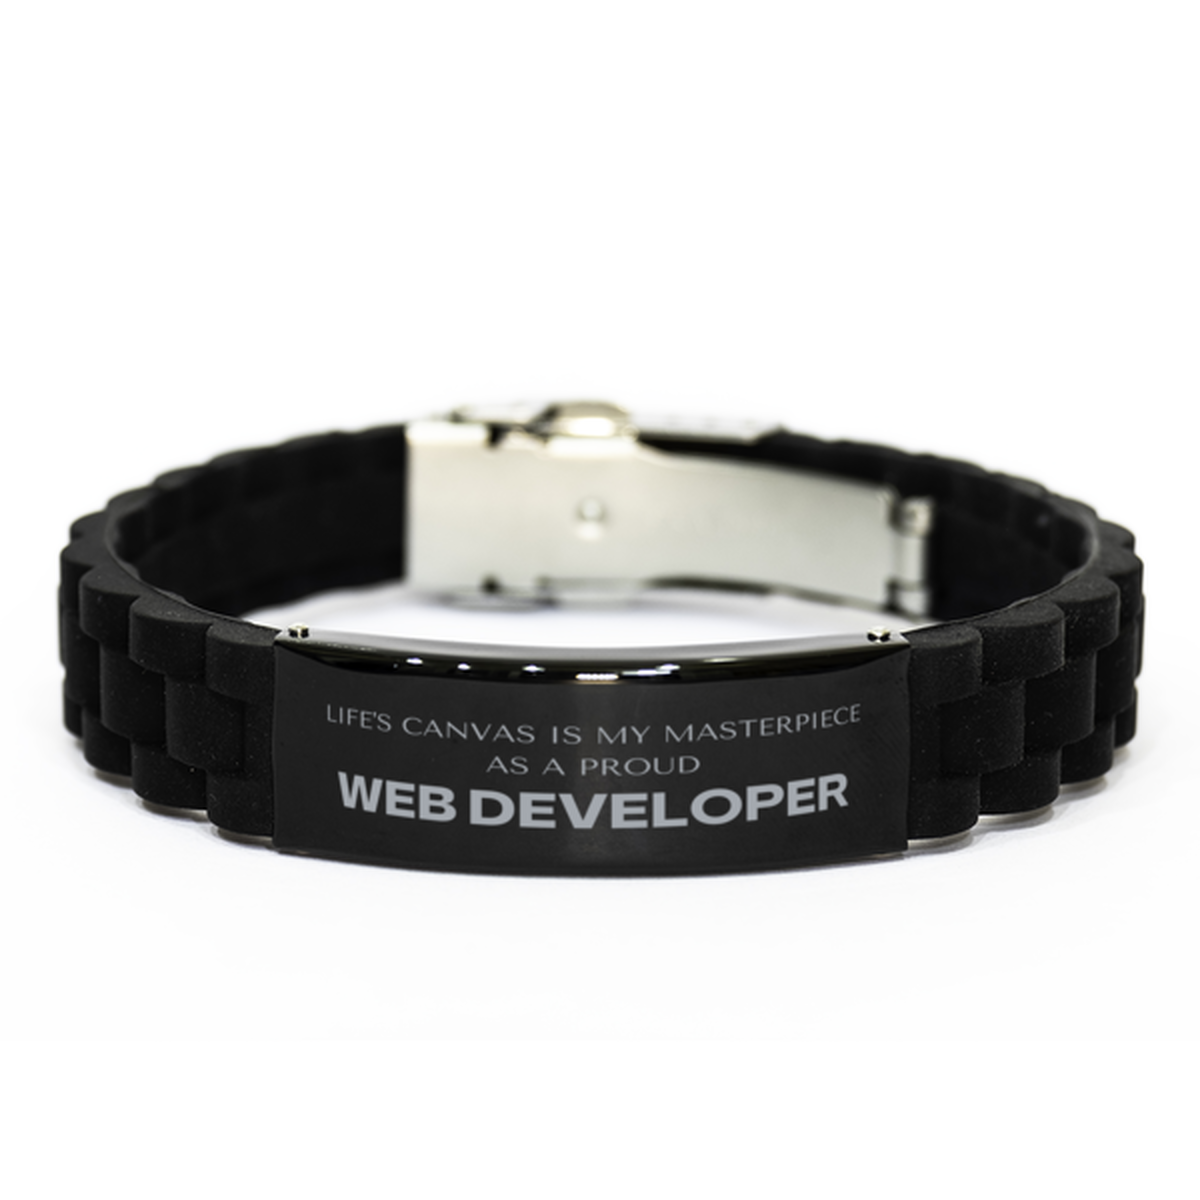 Proud Web Developer Gifts, Life's canvas is my masterpiece, Epic Birthday Christmas Unique Black Glidelock Clasp Bracelet For Web Developer, Coworkers, Men, Women, Friends